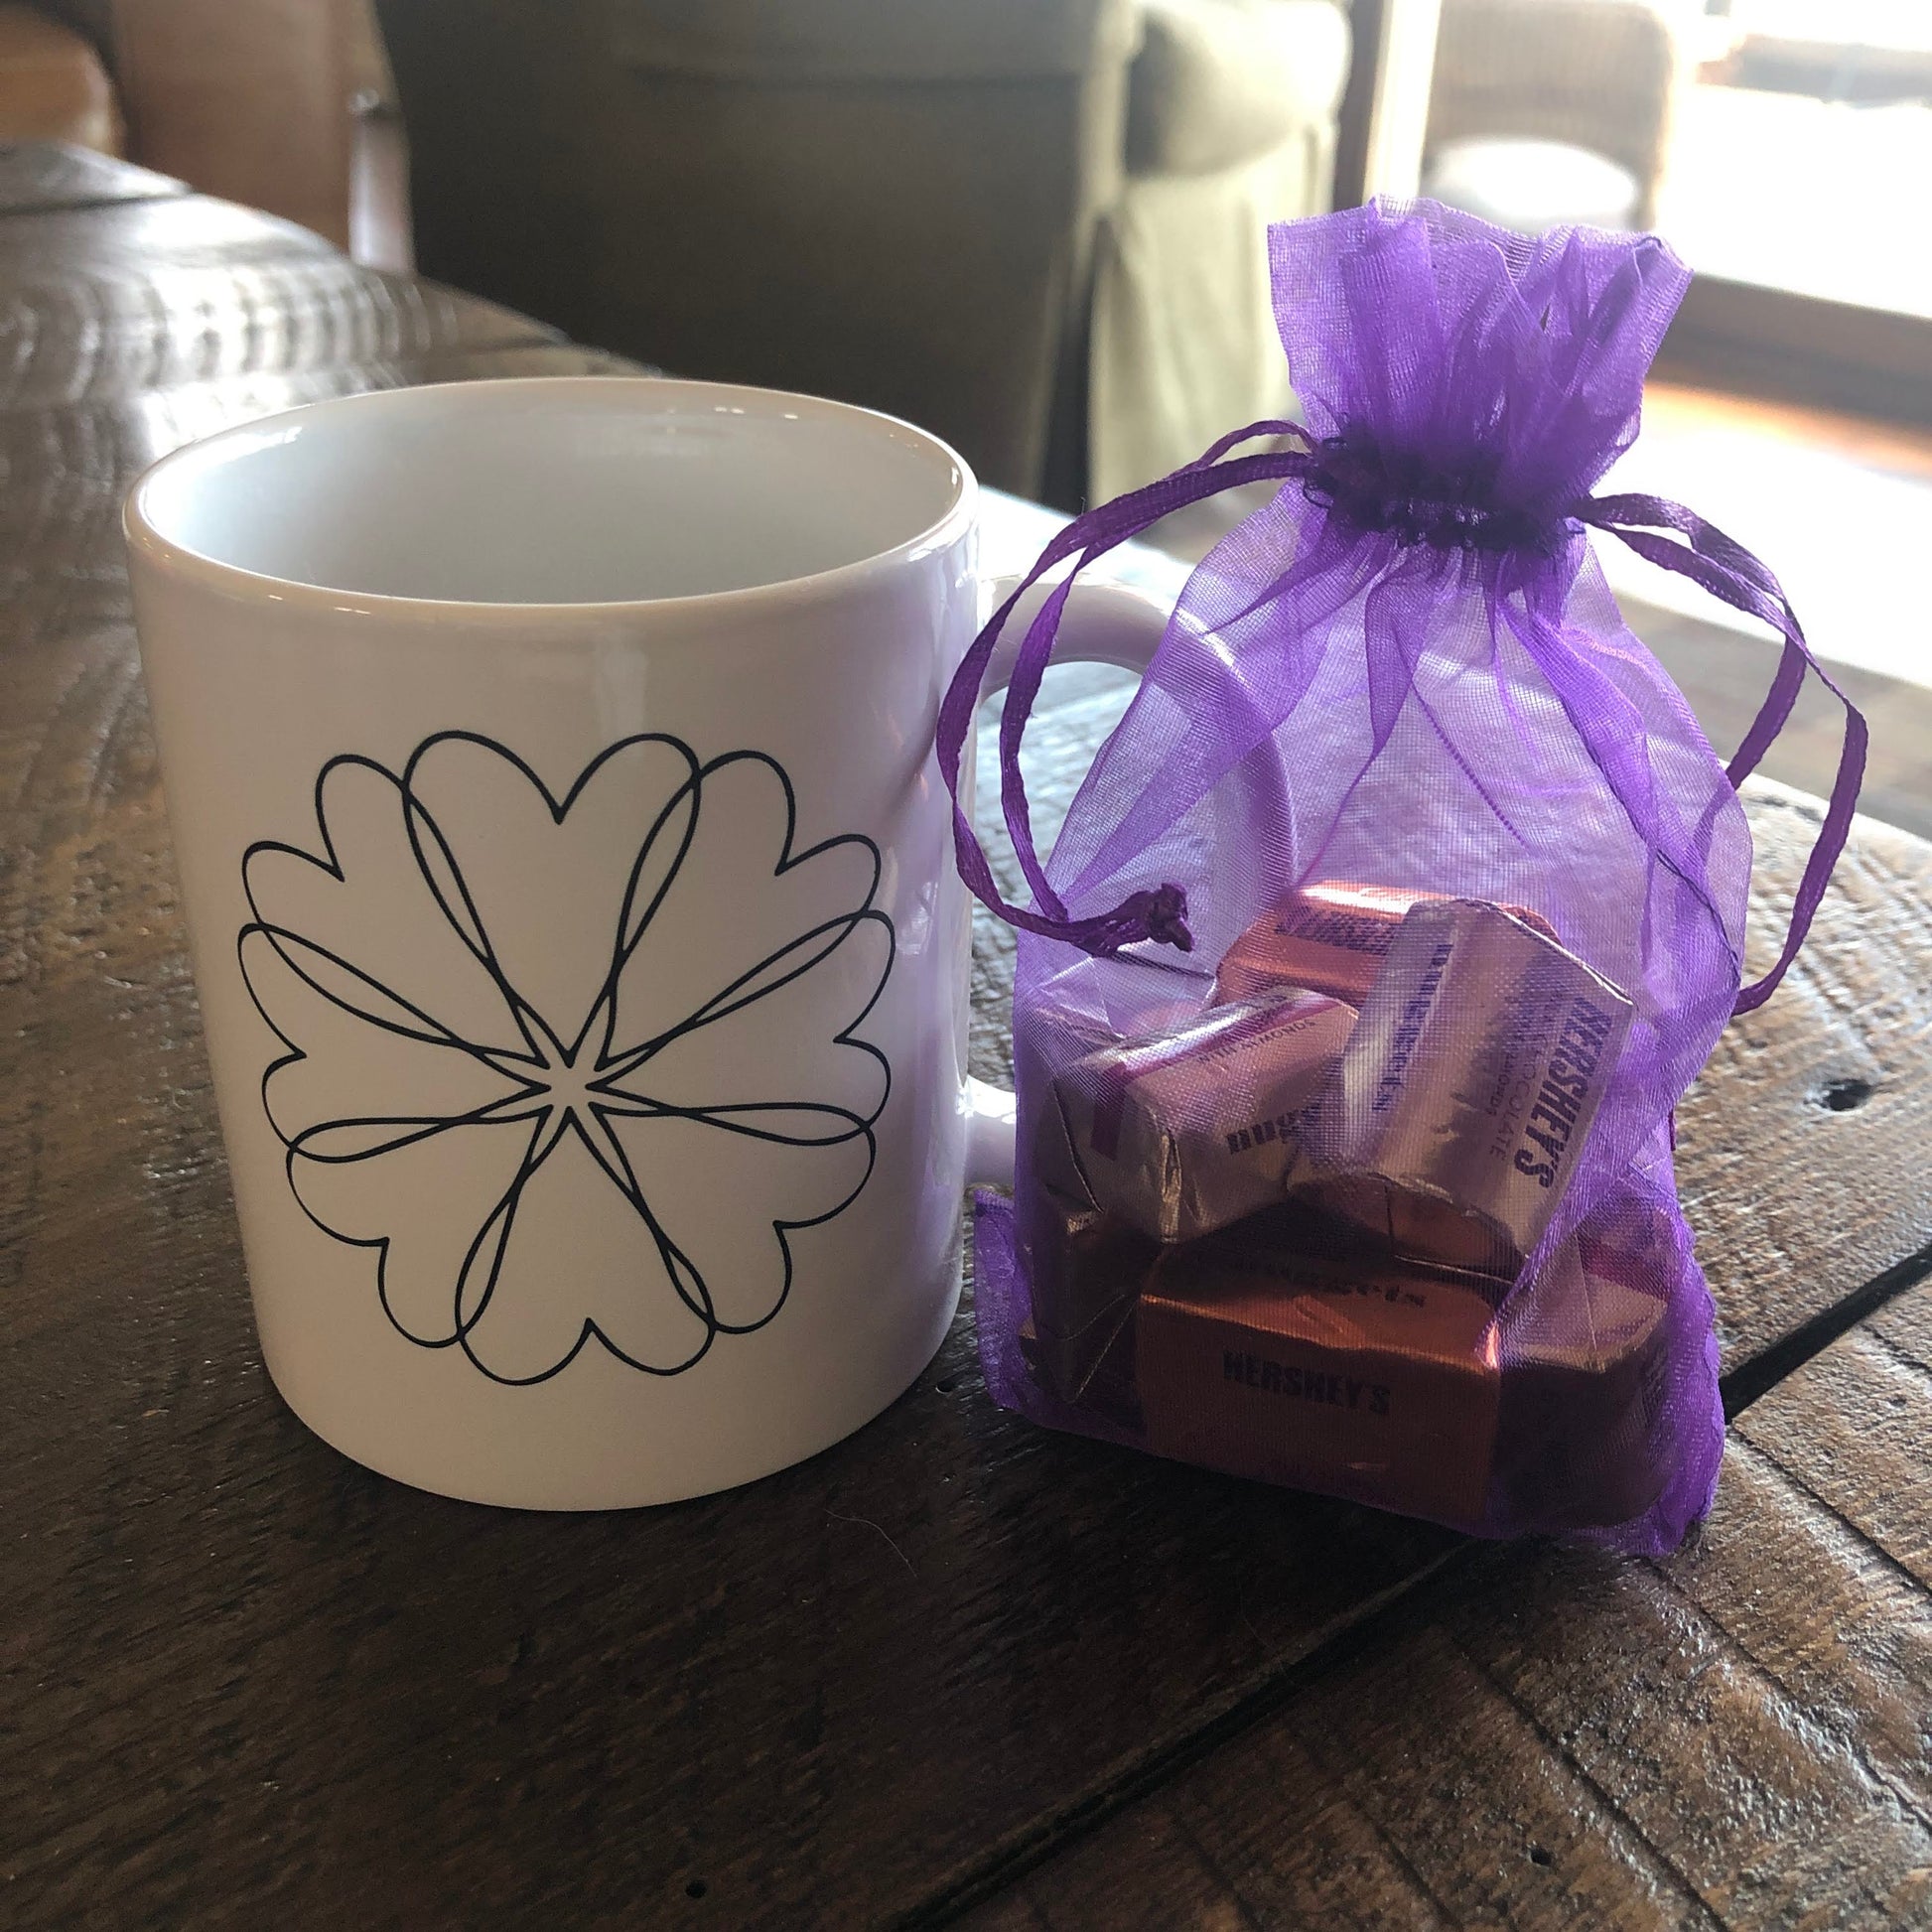 White ceramic mug with heart wreath design and chocolates